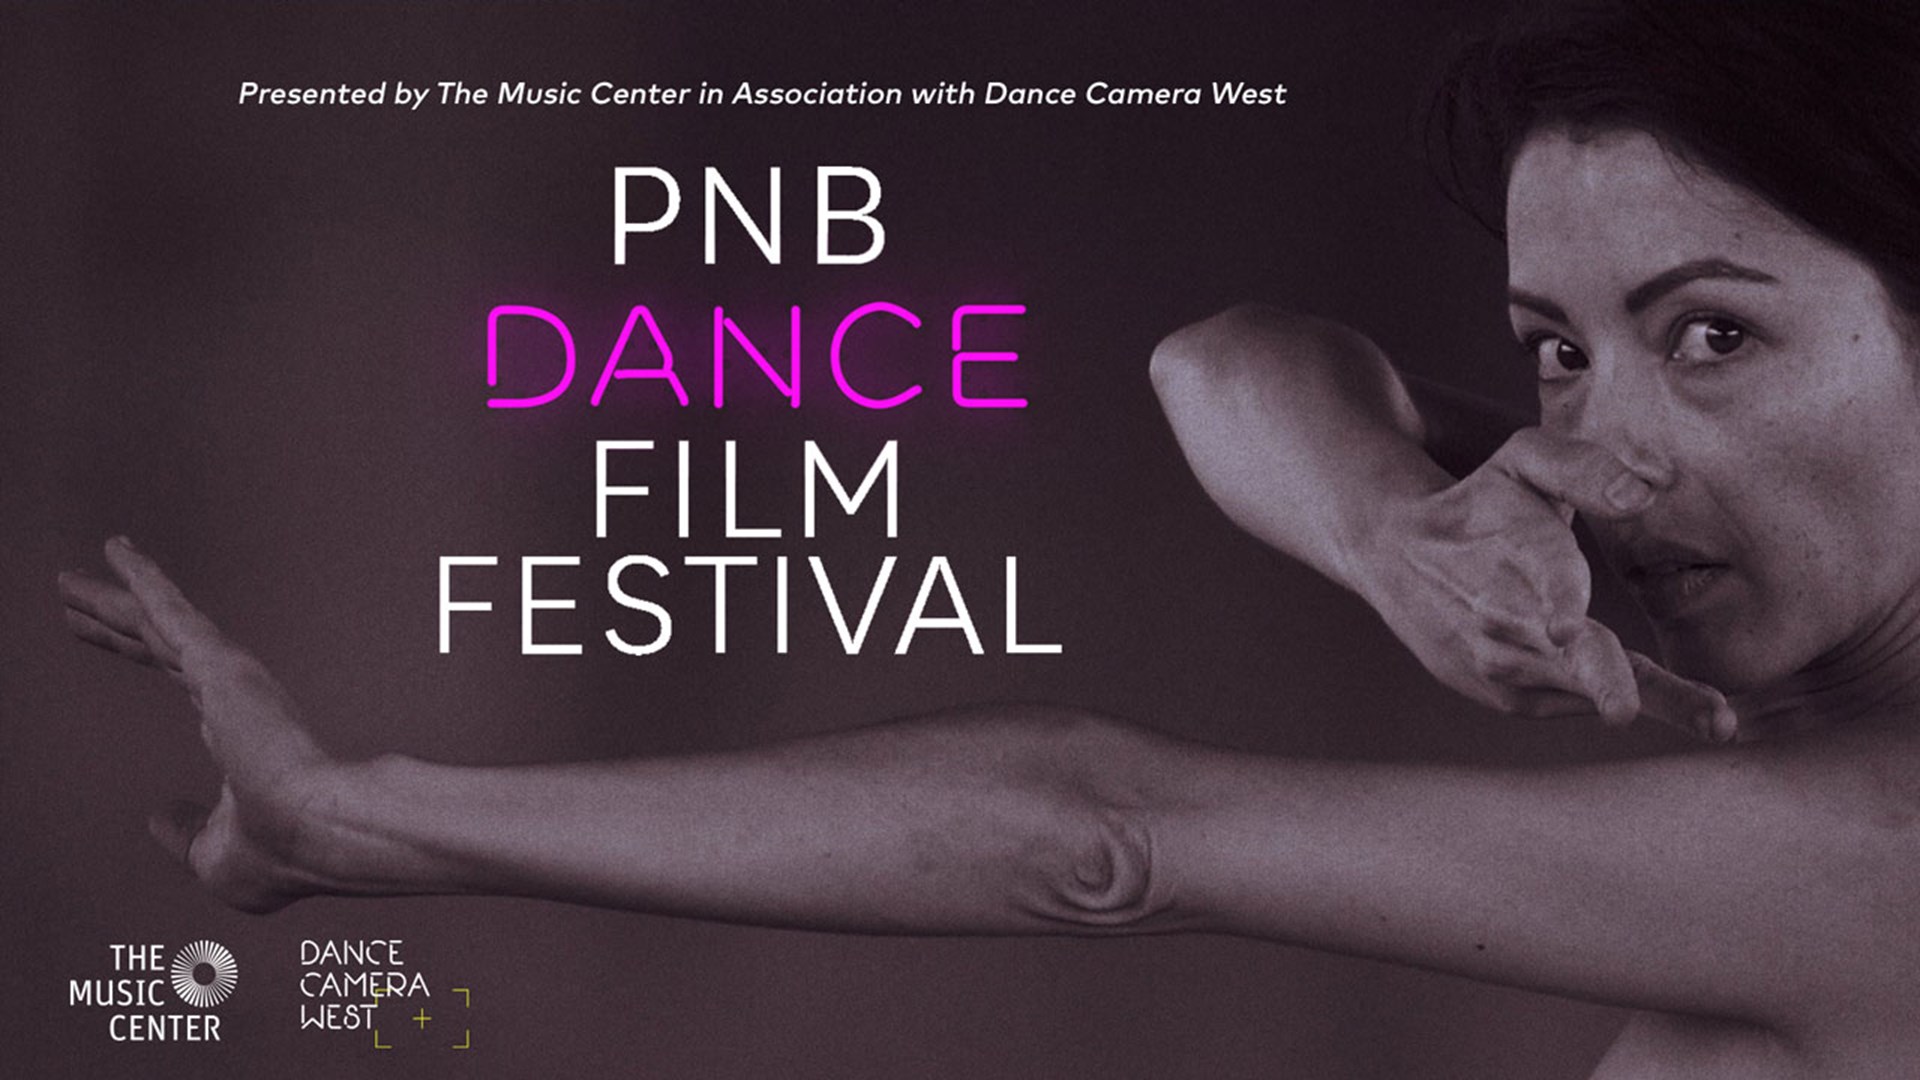 PNB Dance Film Festival